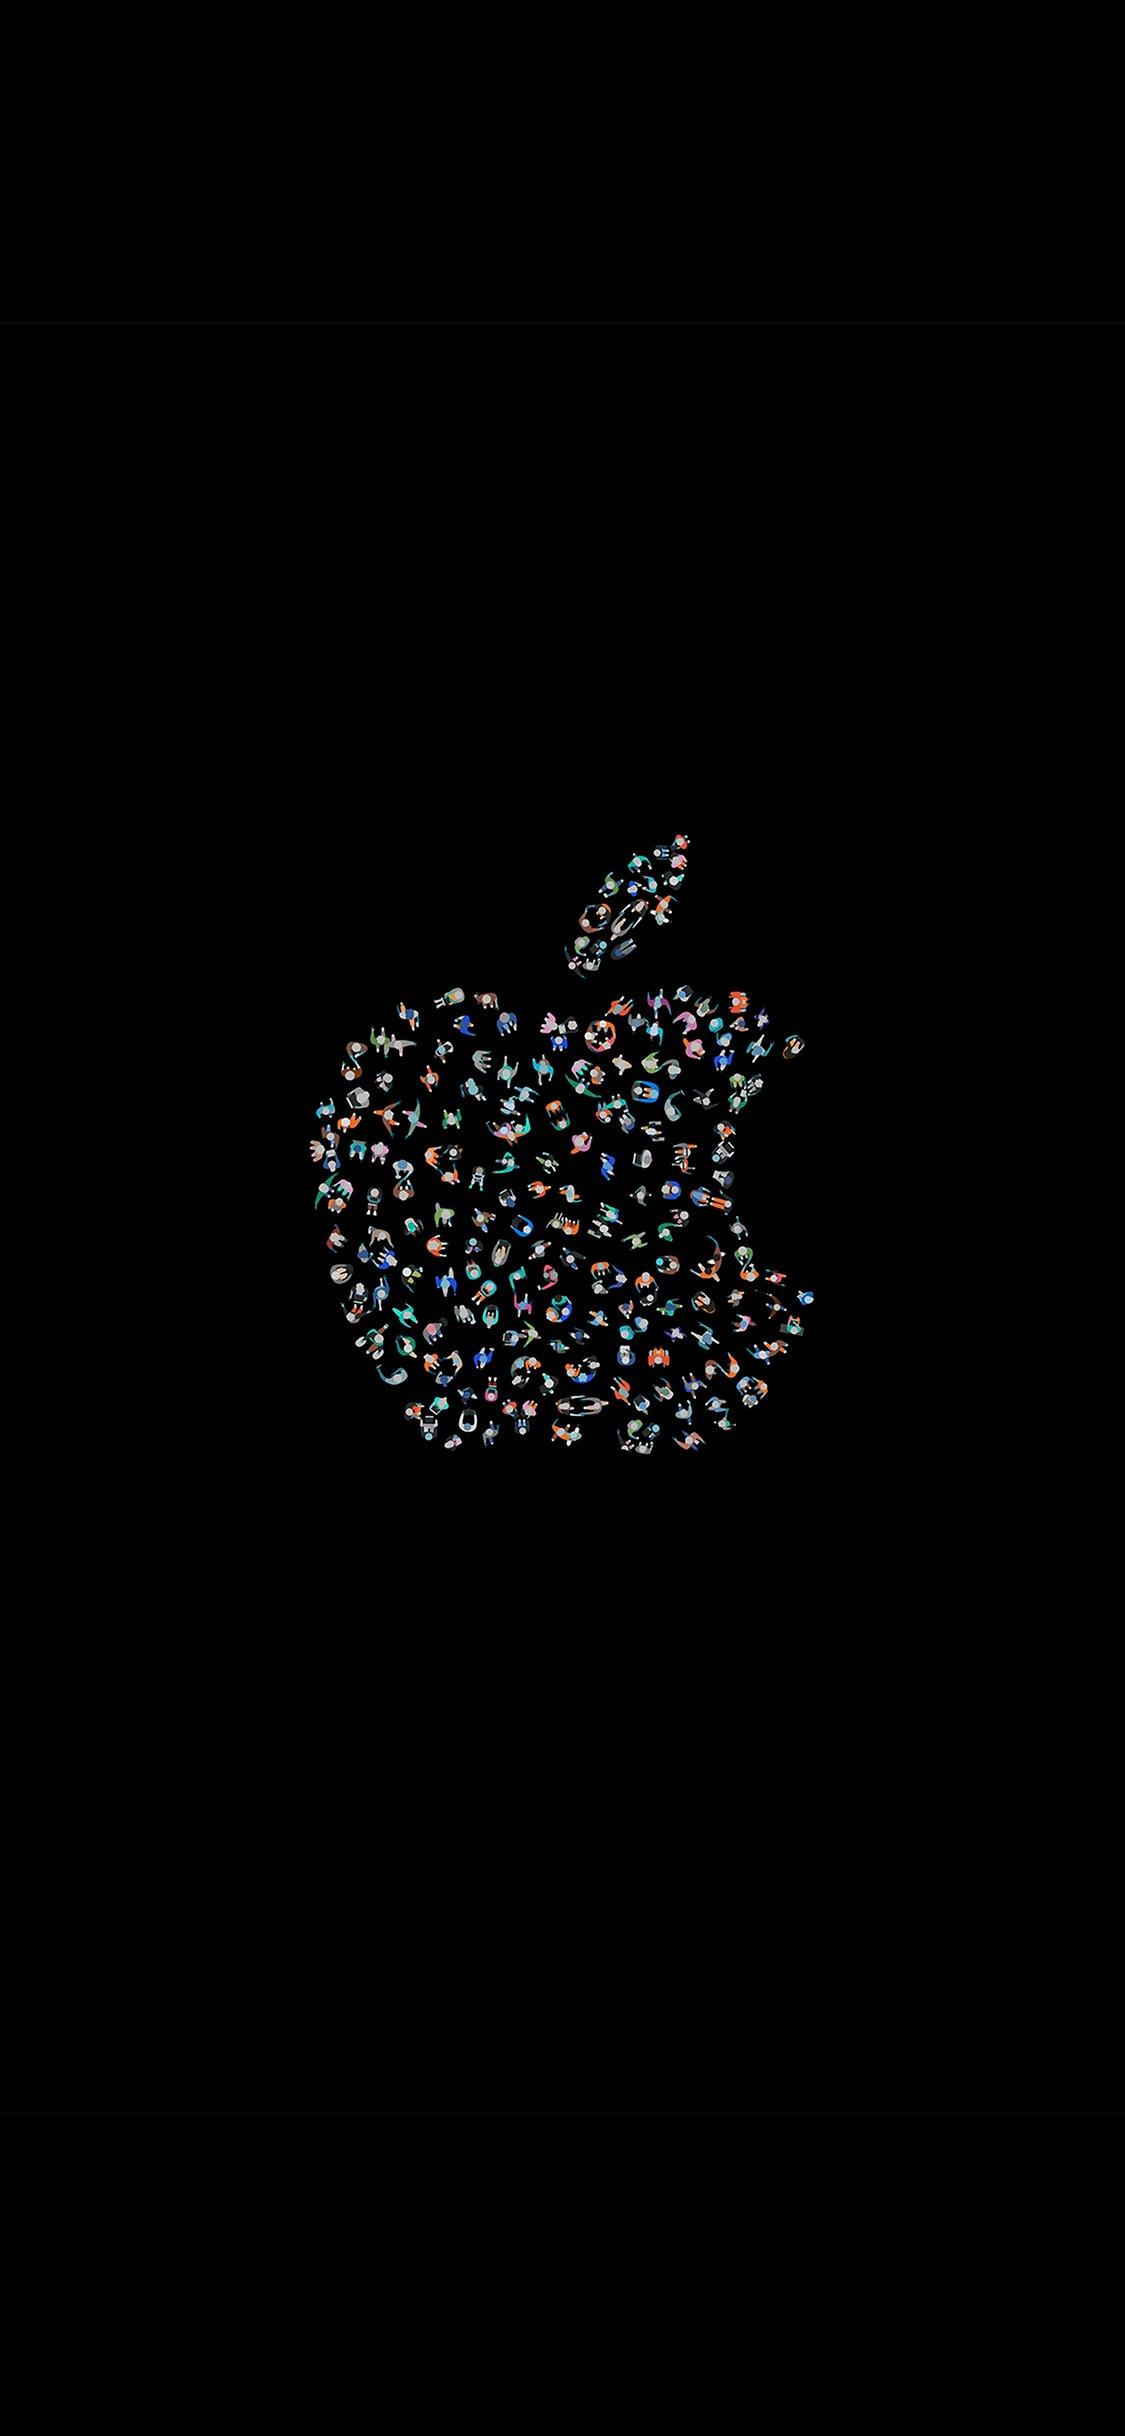 iPhone X wallpaper. wwdc apple logo dark